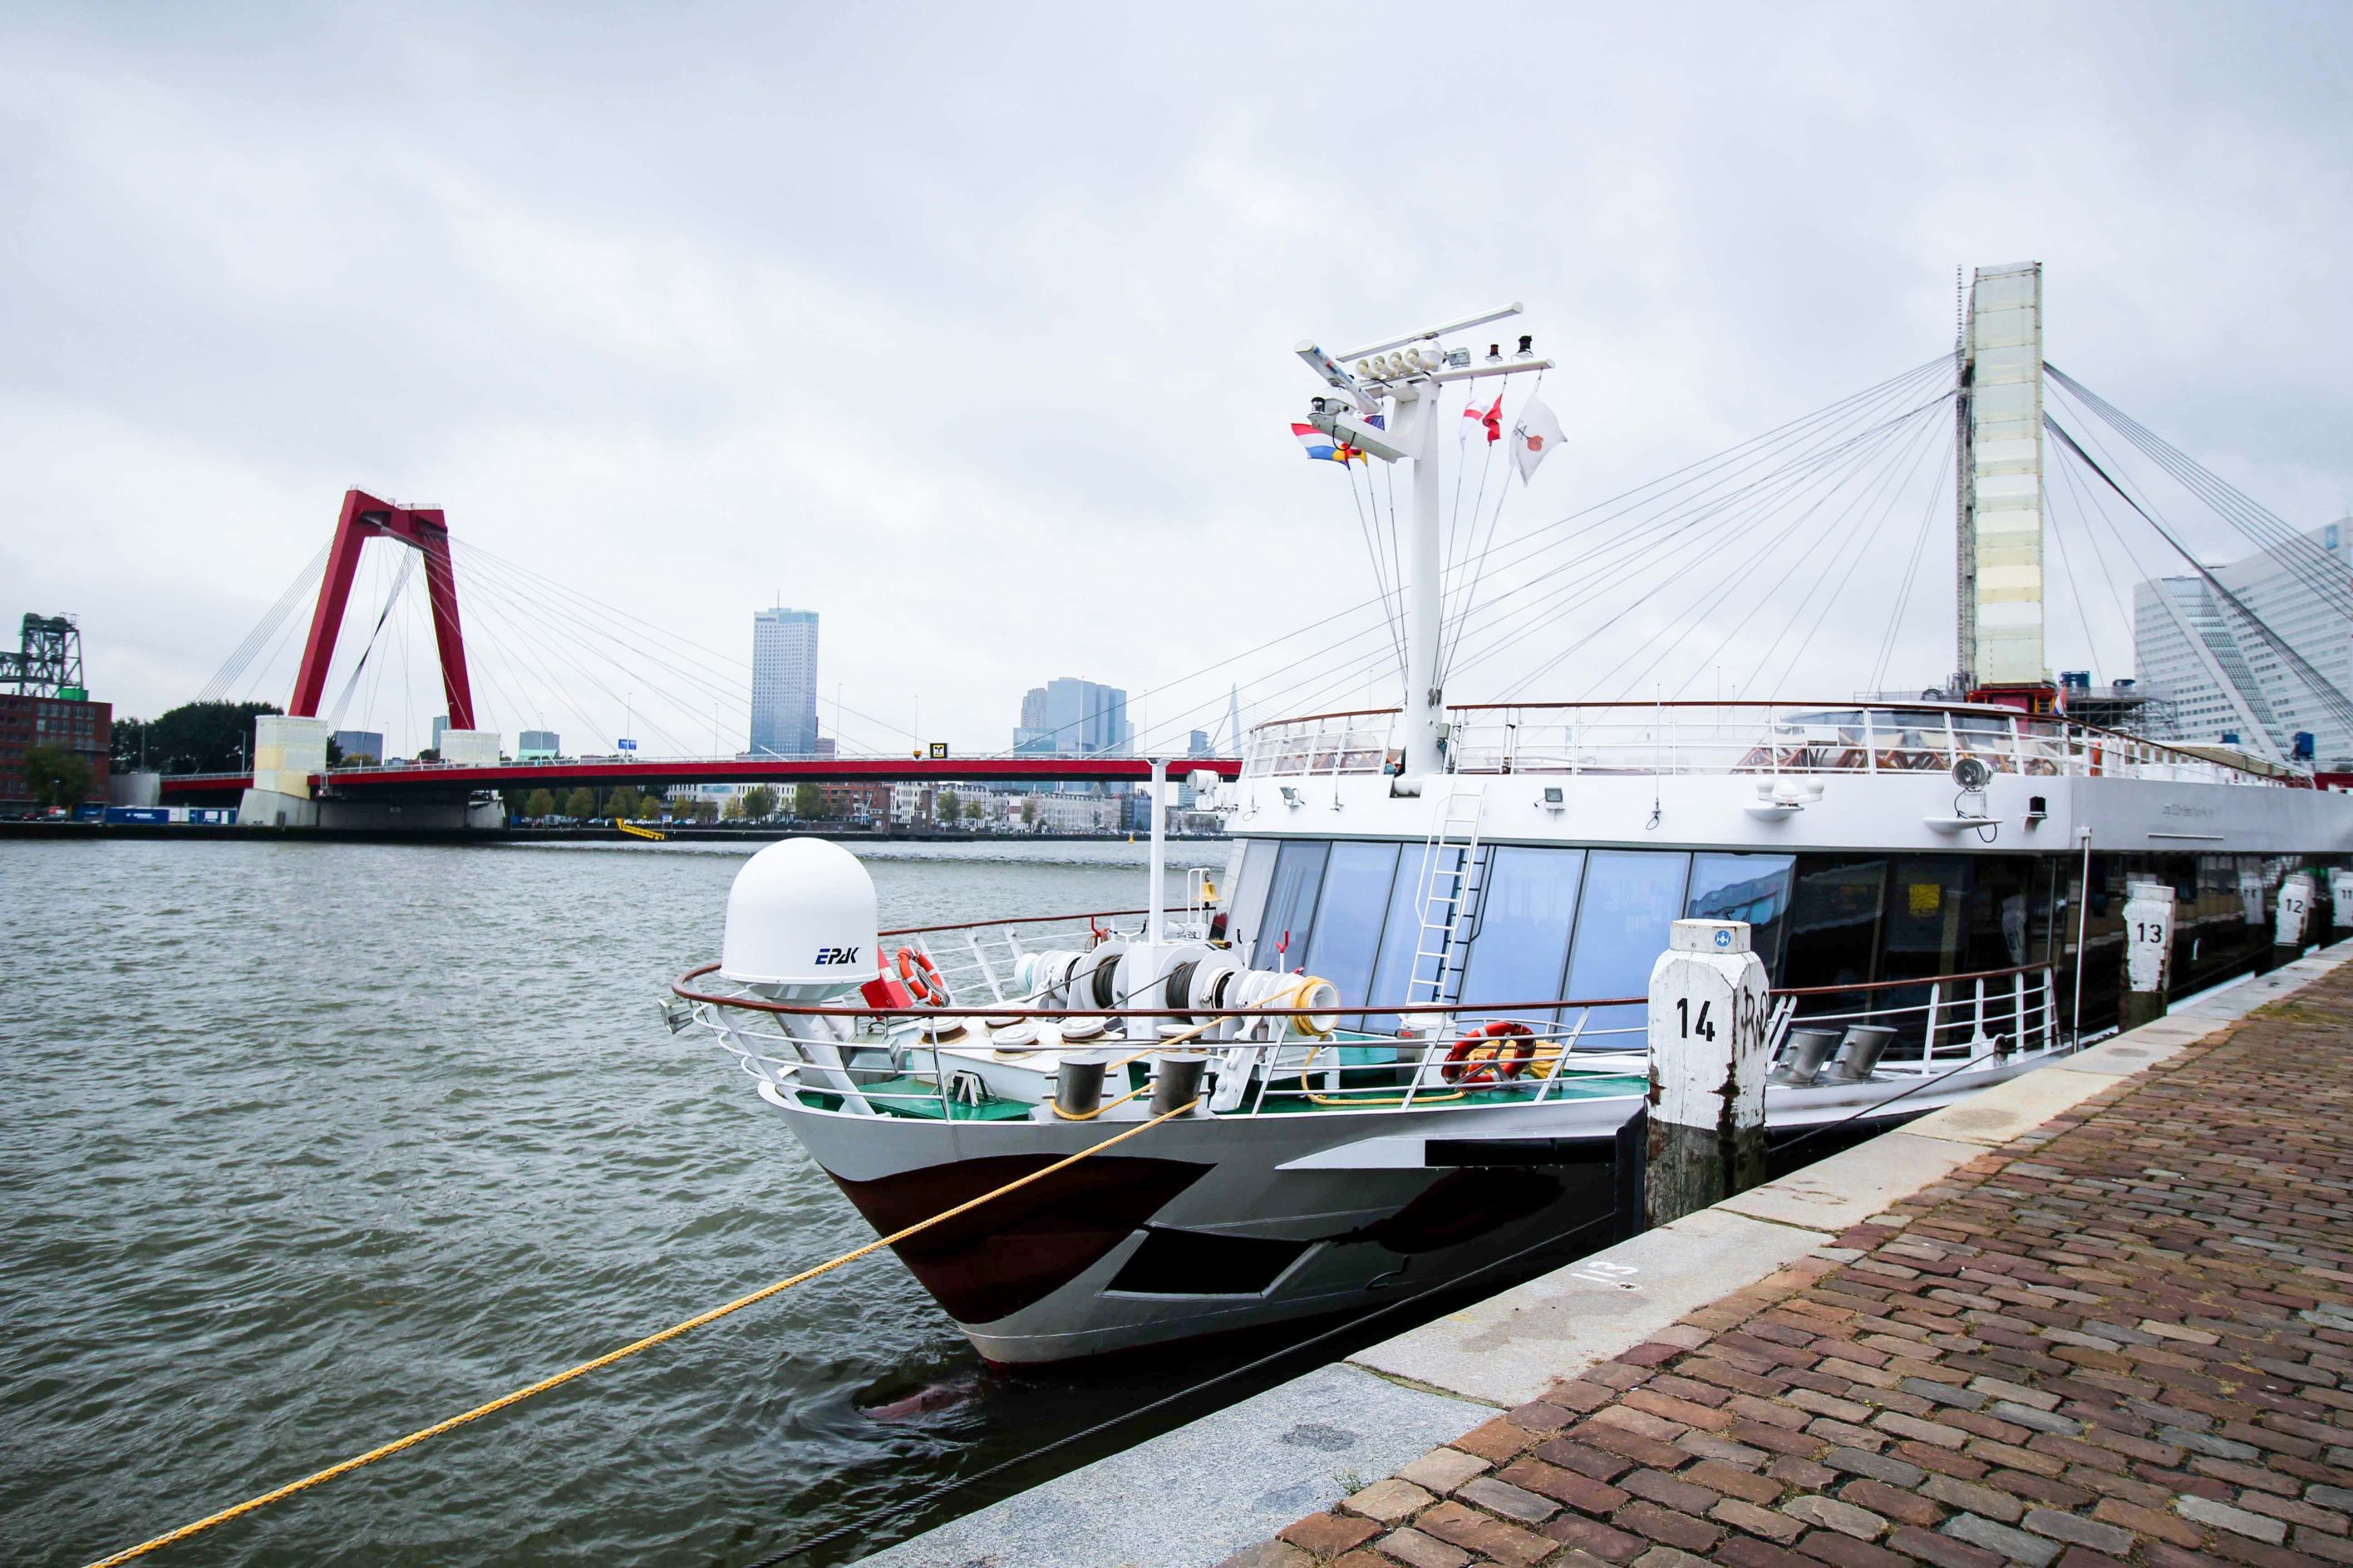 Rotterdam Flusskreuzfahrt A-ROSA SILVA Kreuzfahrtschiff Rhein Erlebnis Kurs Amsterdam Erfahrung Flusskreuzfahrt Reiseblog-2